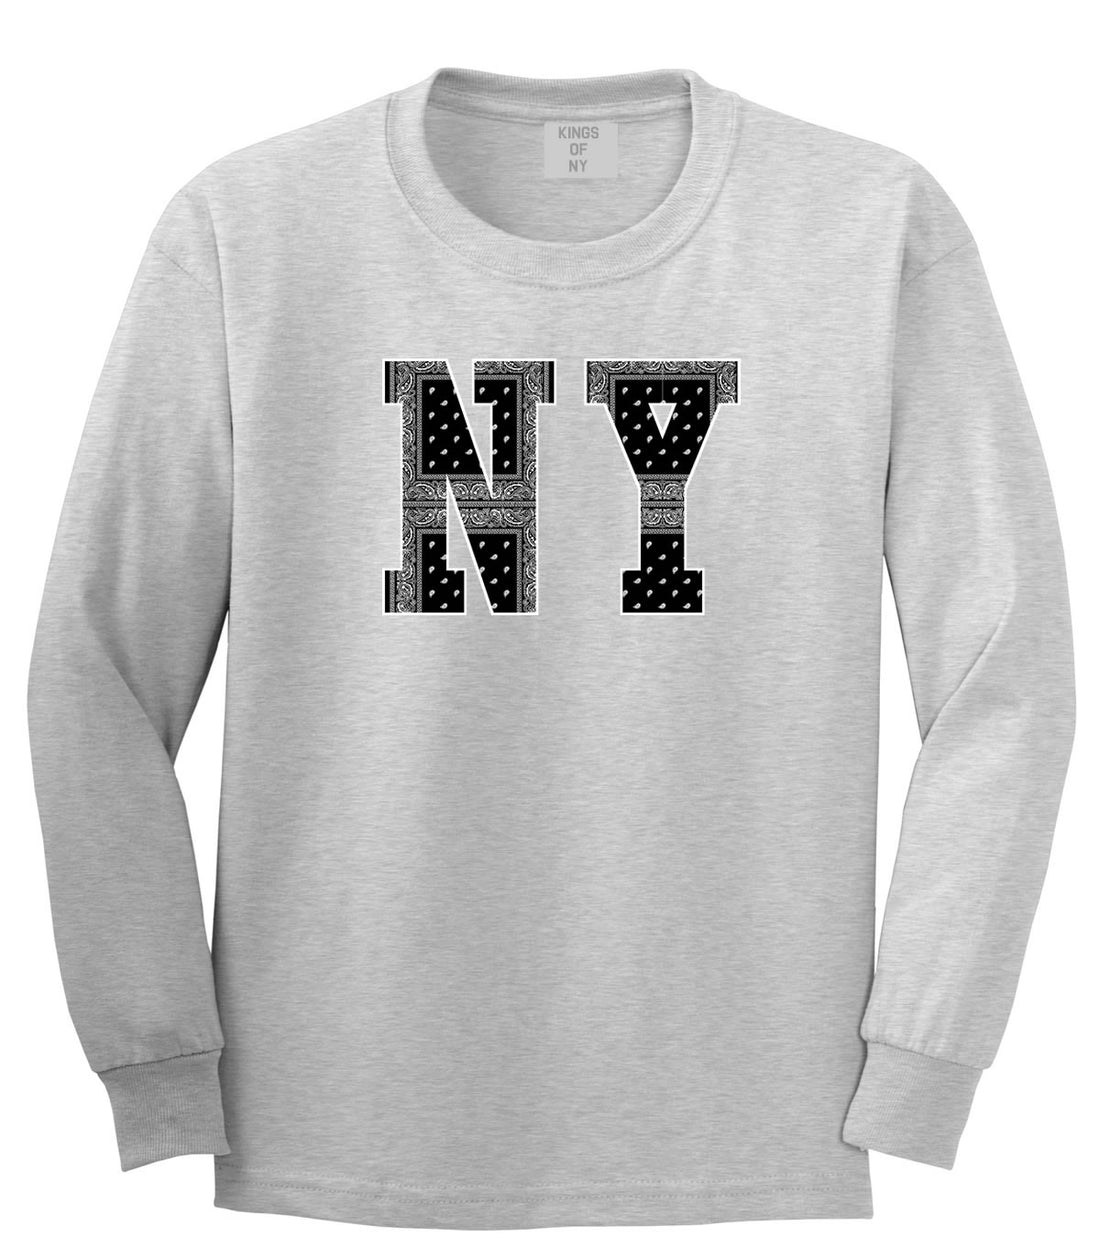 New York Bandana NYC Black by Kings Of NY Gang Flag Long Sleeve Boys Kids T-Shirt In Grey by Kings Of NY